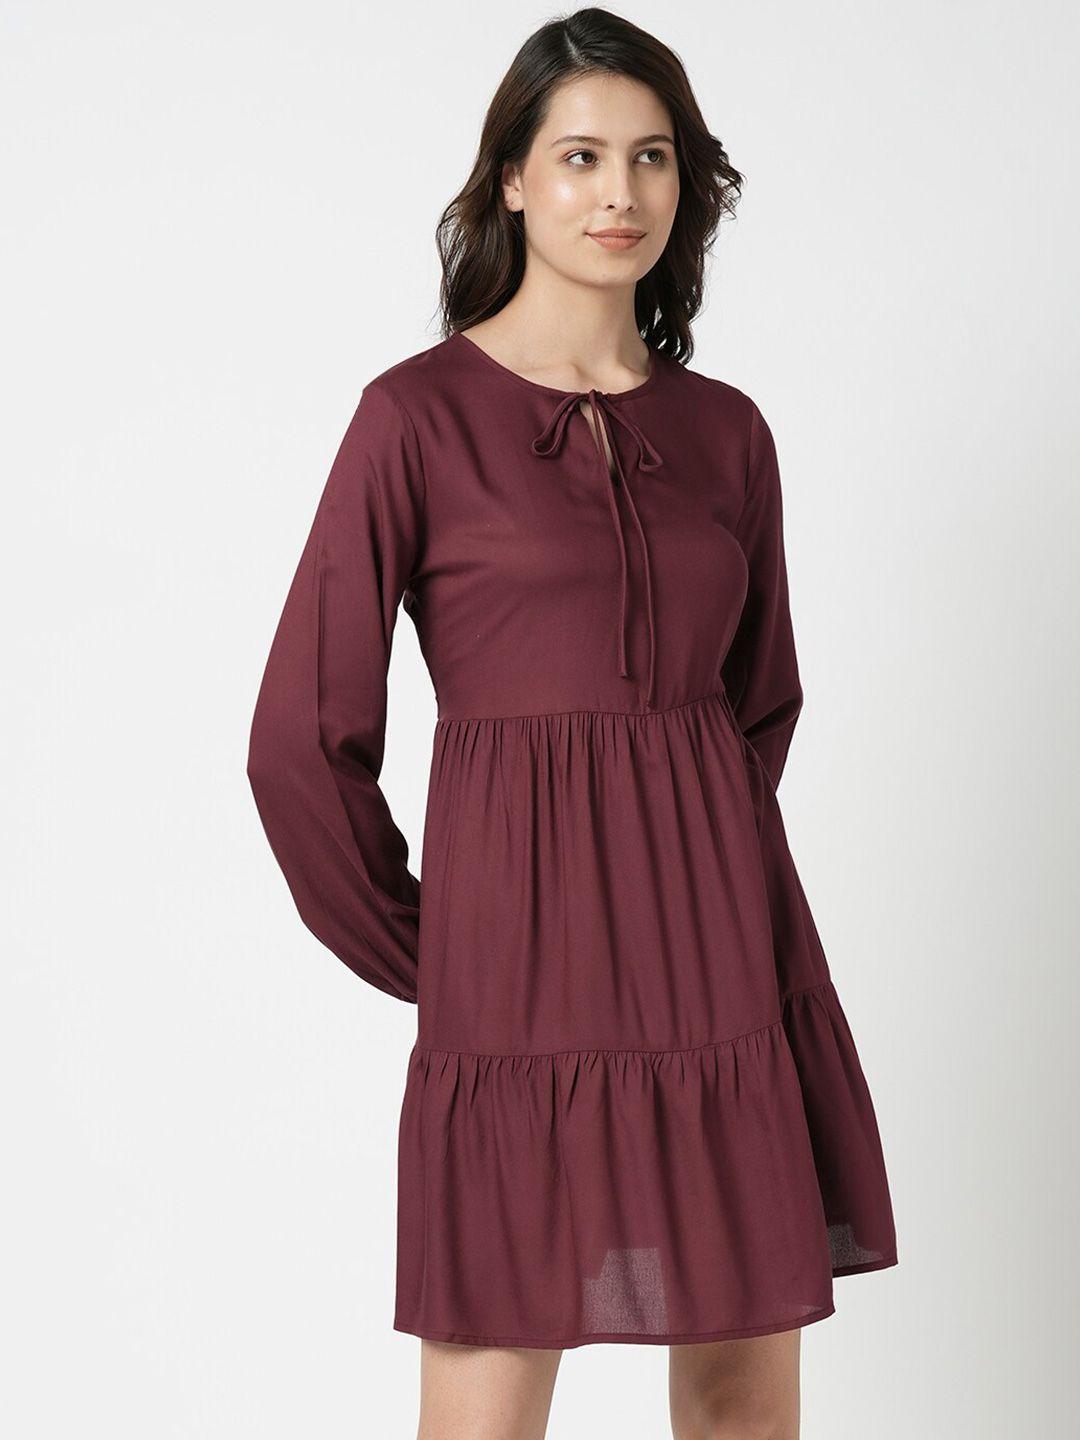 vero-moda-maroon-bishop-sleeve-ruffled-fit-&-flare-dress